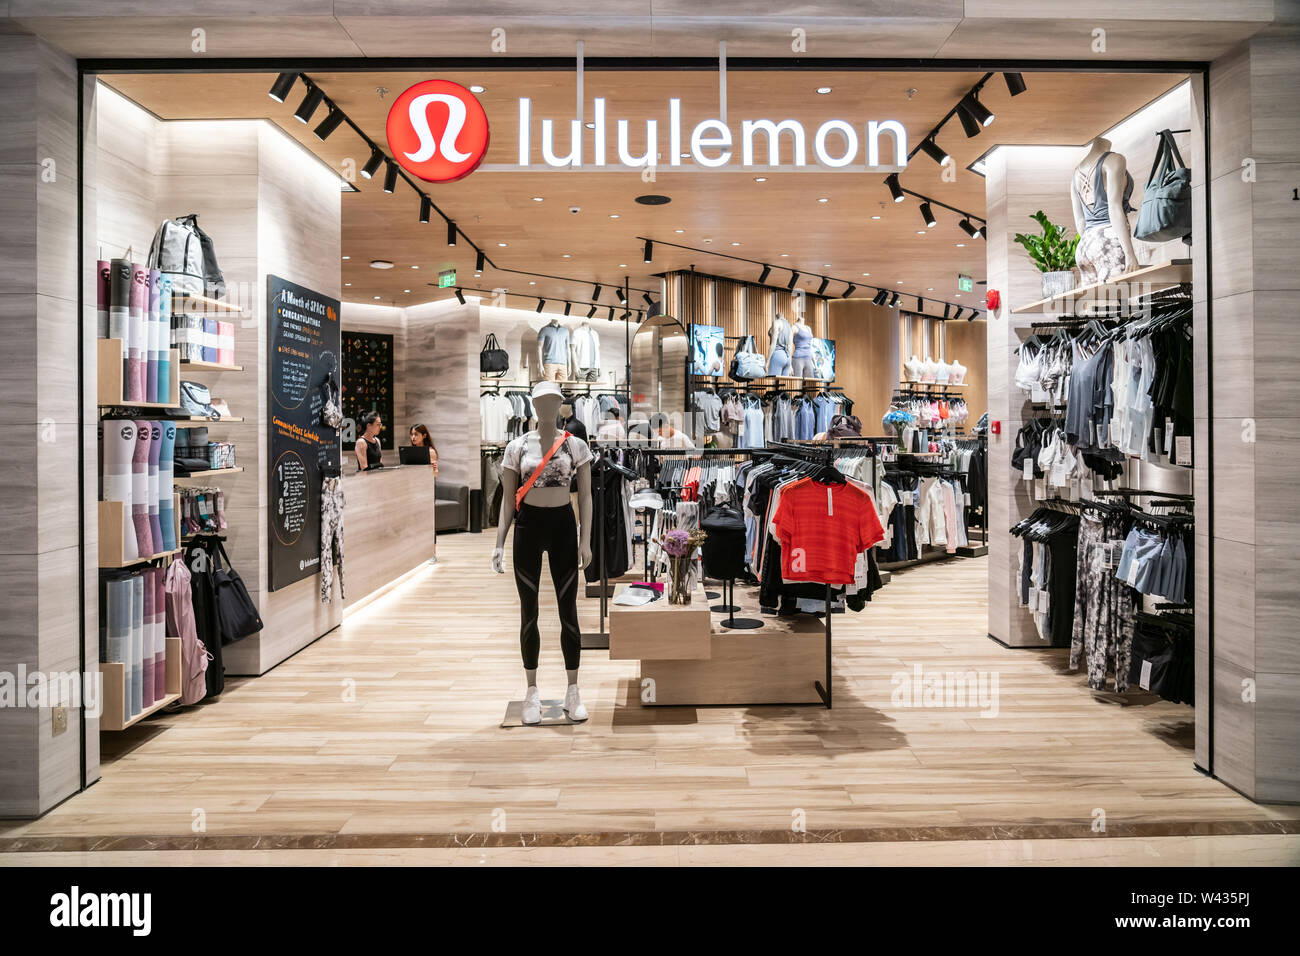 https://c8.alamy.com/comp/W435PJ/canadian-athletic-apparel-retailer-lululemon-store-and-logo-seen-in-shanghai-W435PJ.jpg